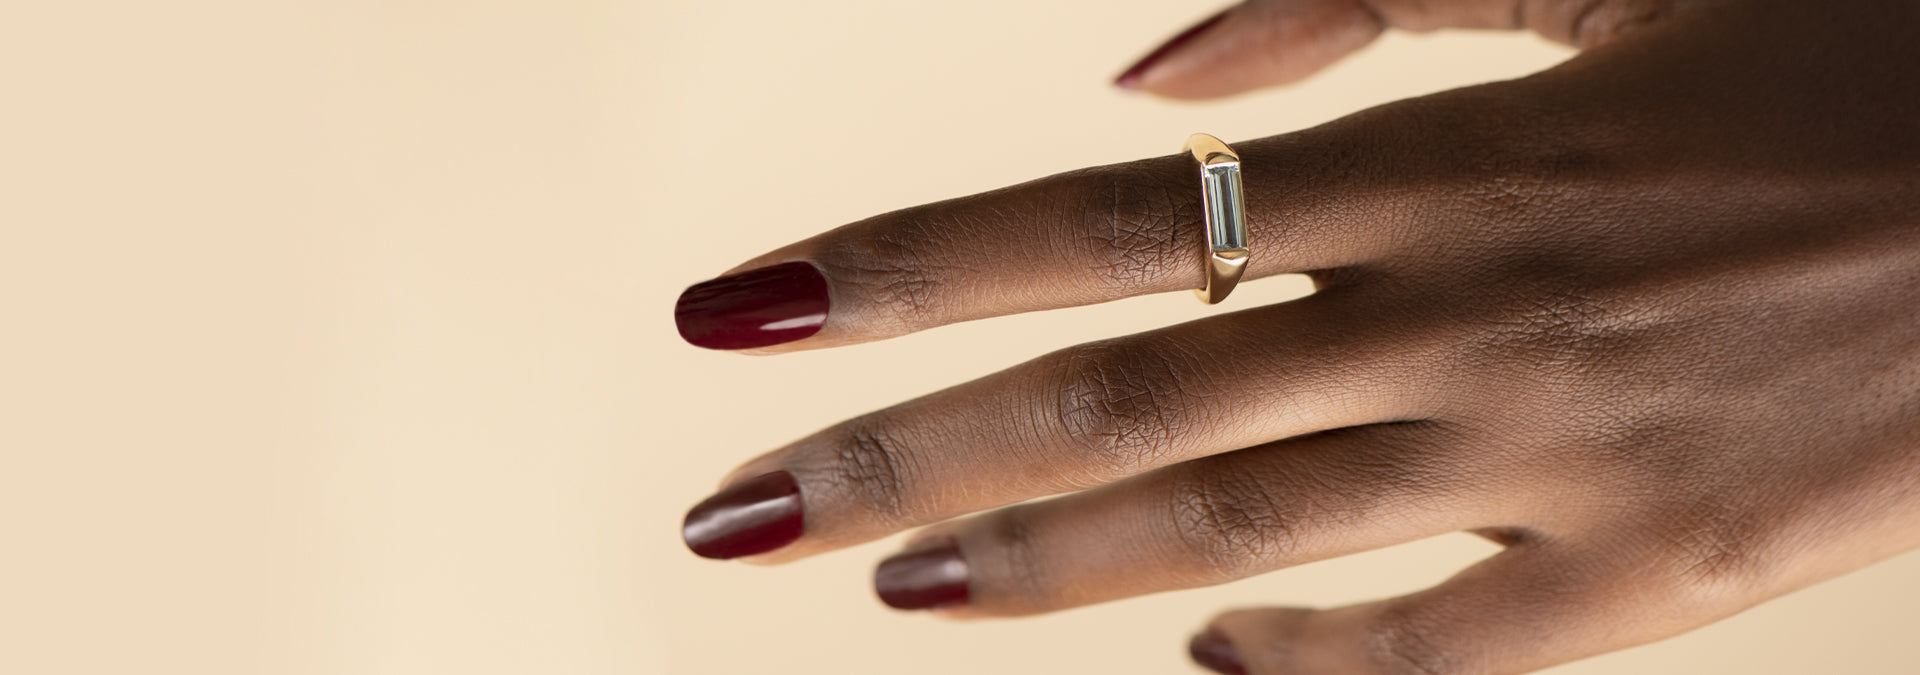 0.11Ct Marquise Cut Diamond Dainty Minimalist Wedding Ring Solid 14K Yellow  Gold | eBay